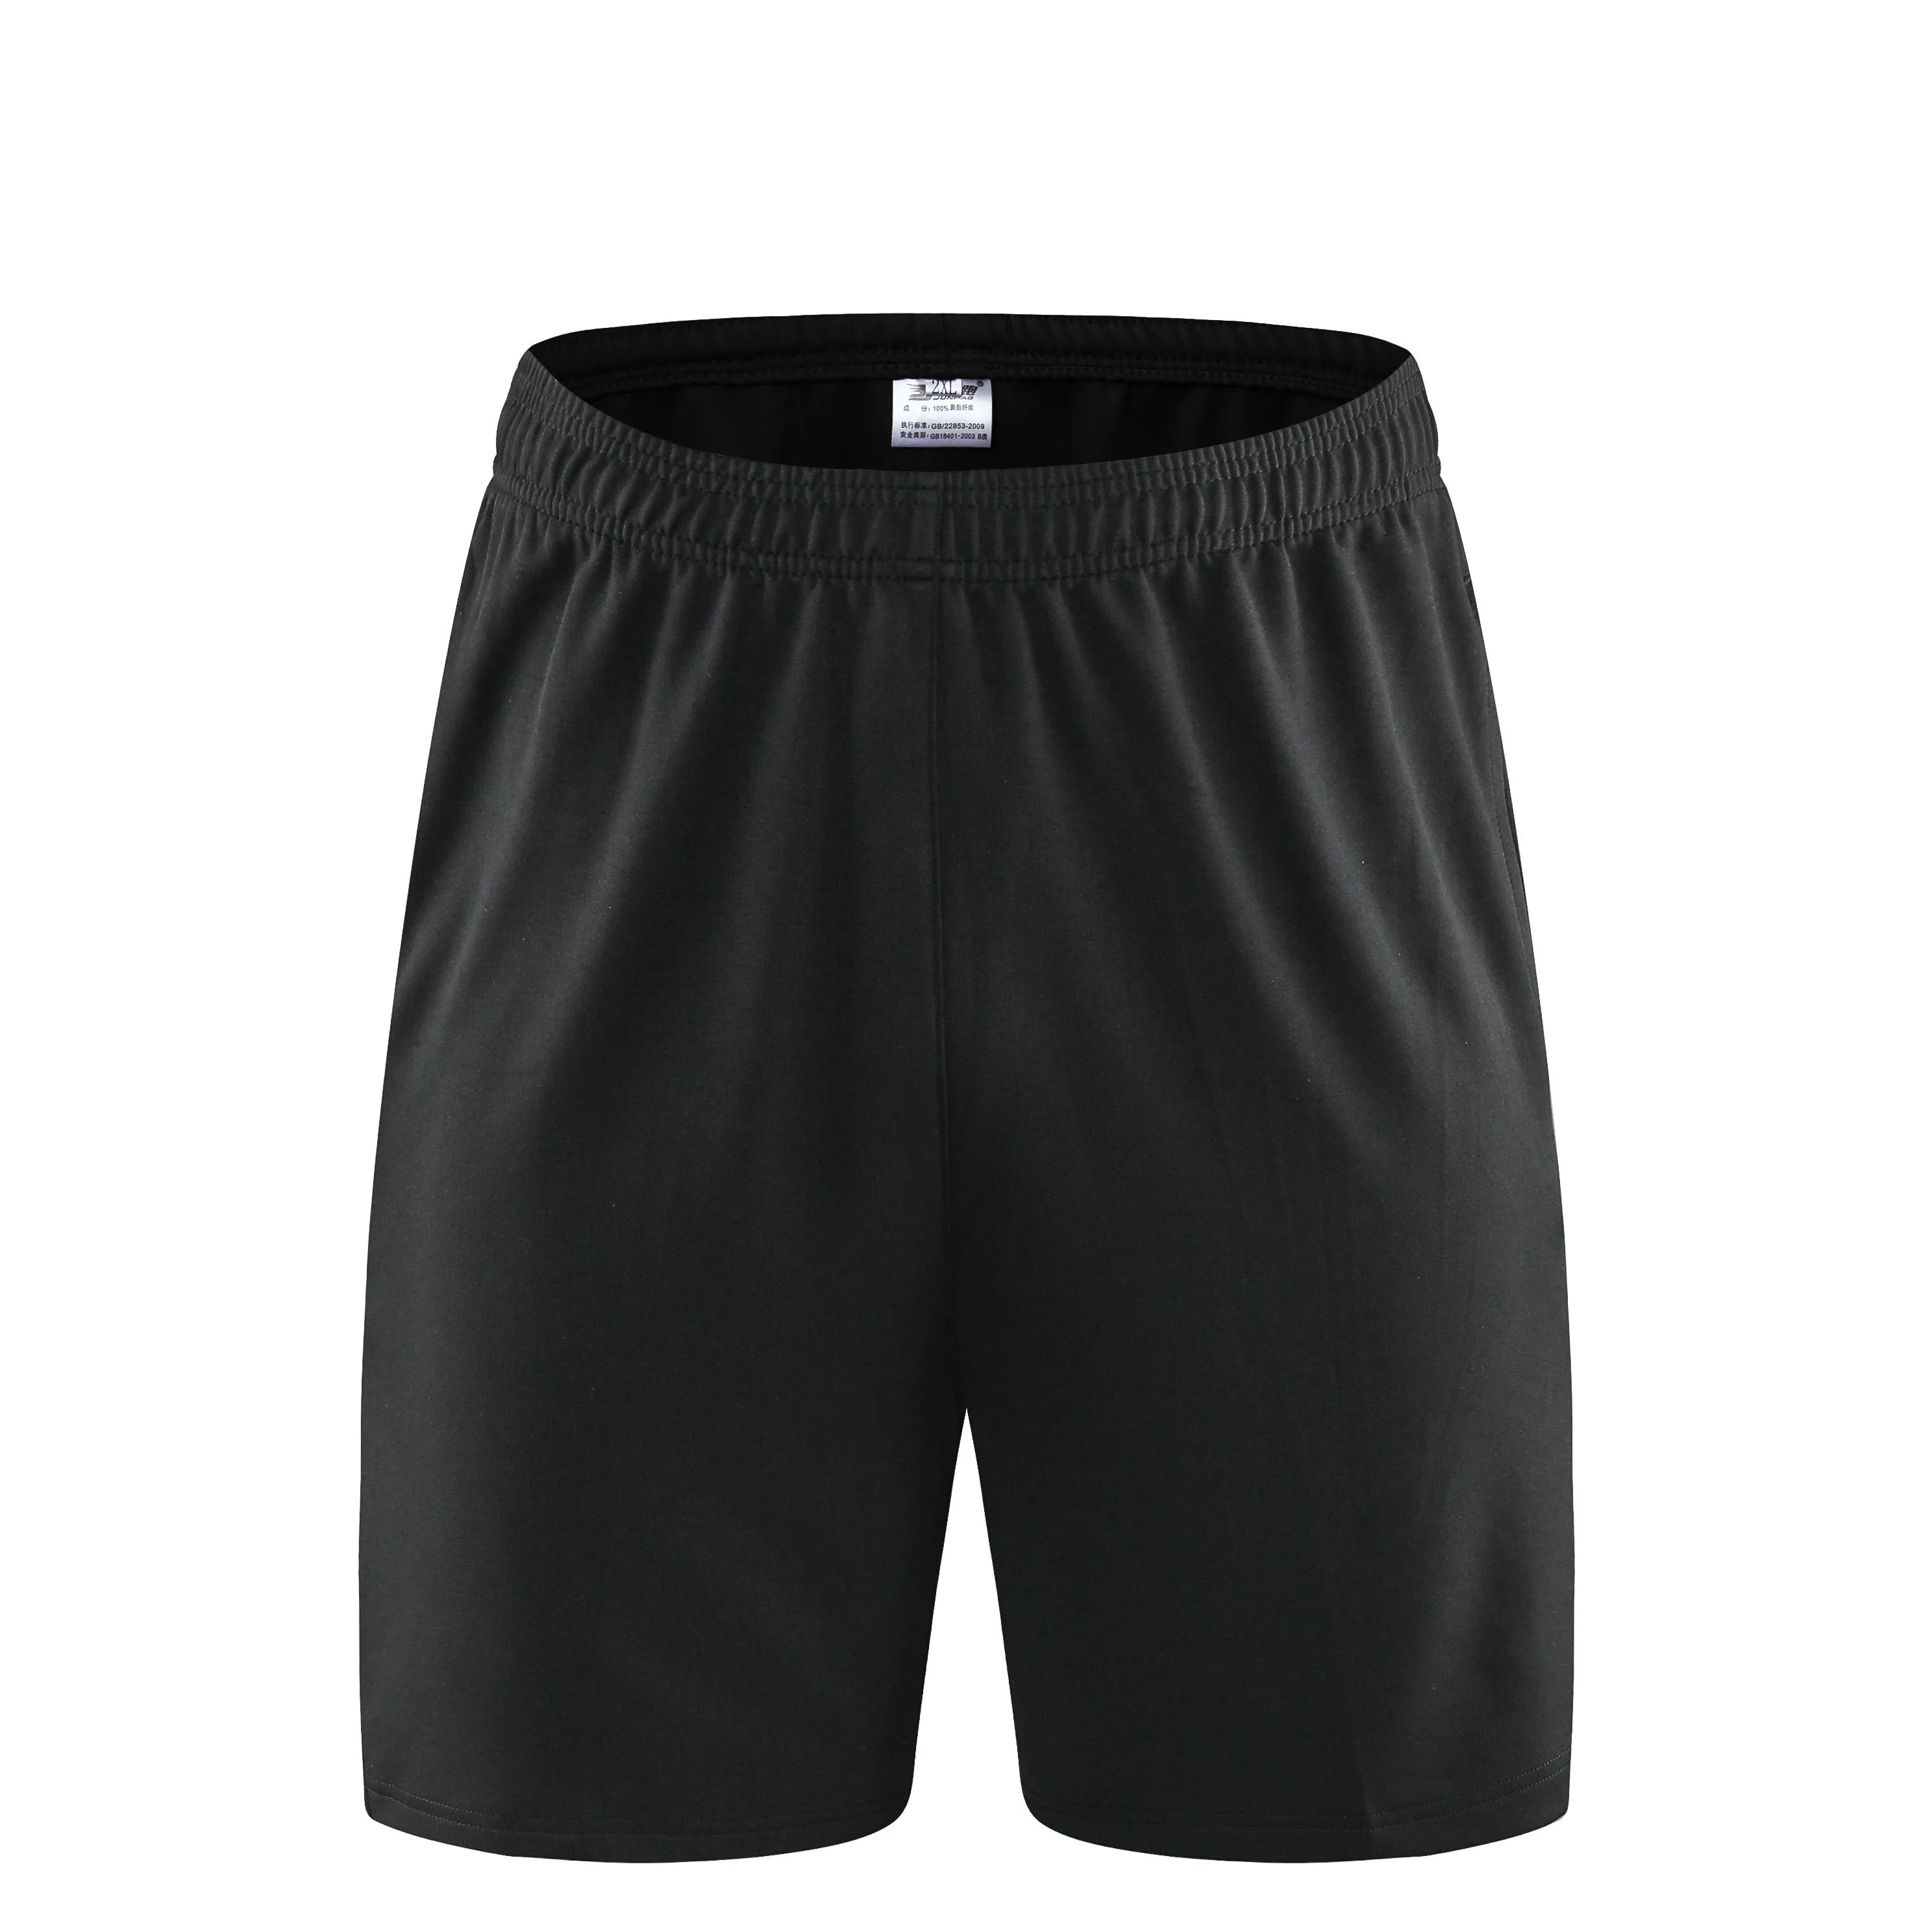 Mens fashion black color sports shorts custom jogger shorts high quality short running shorts